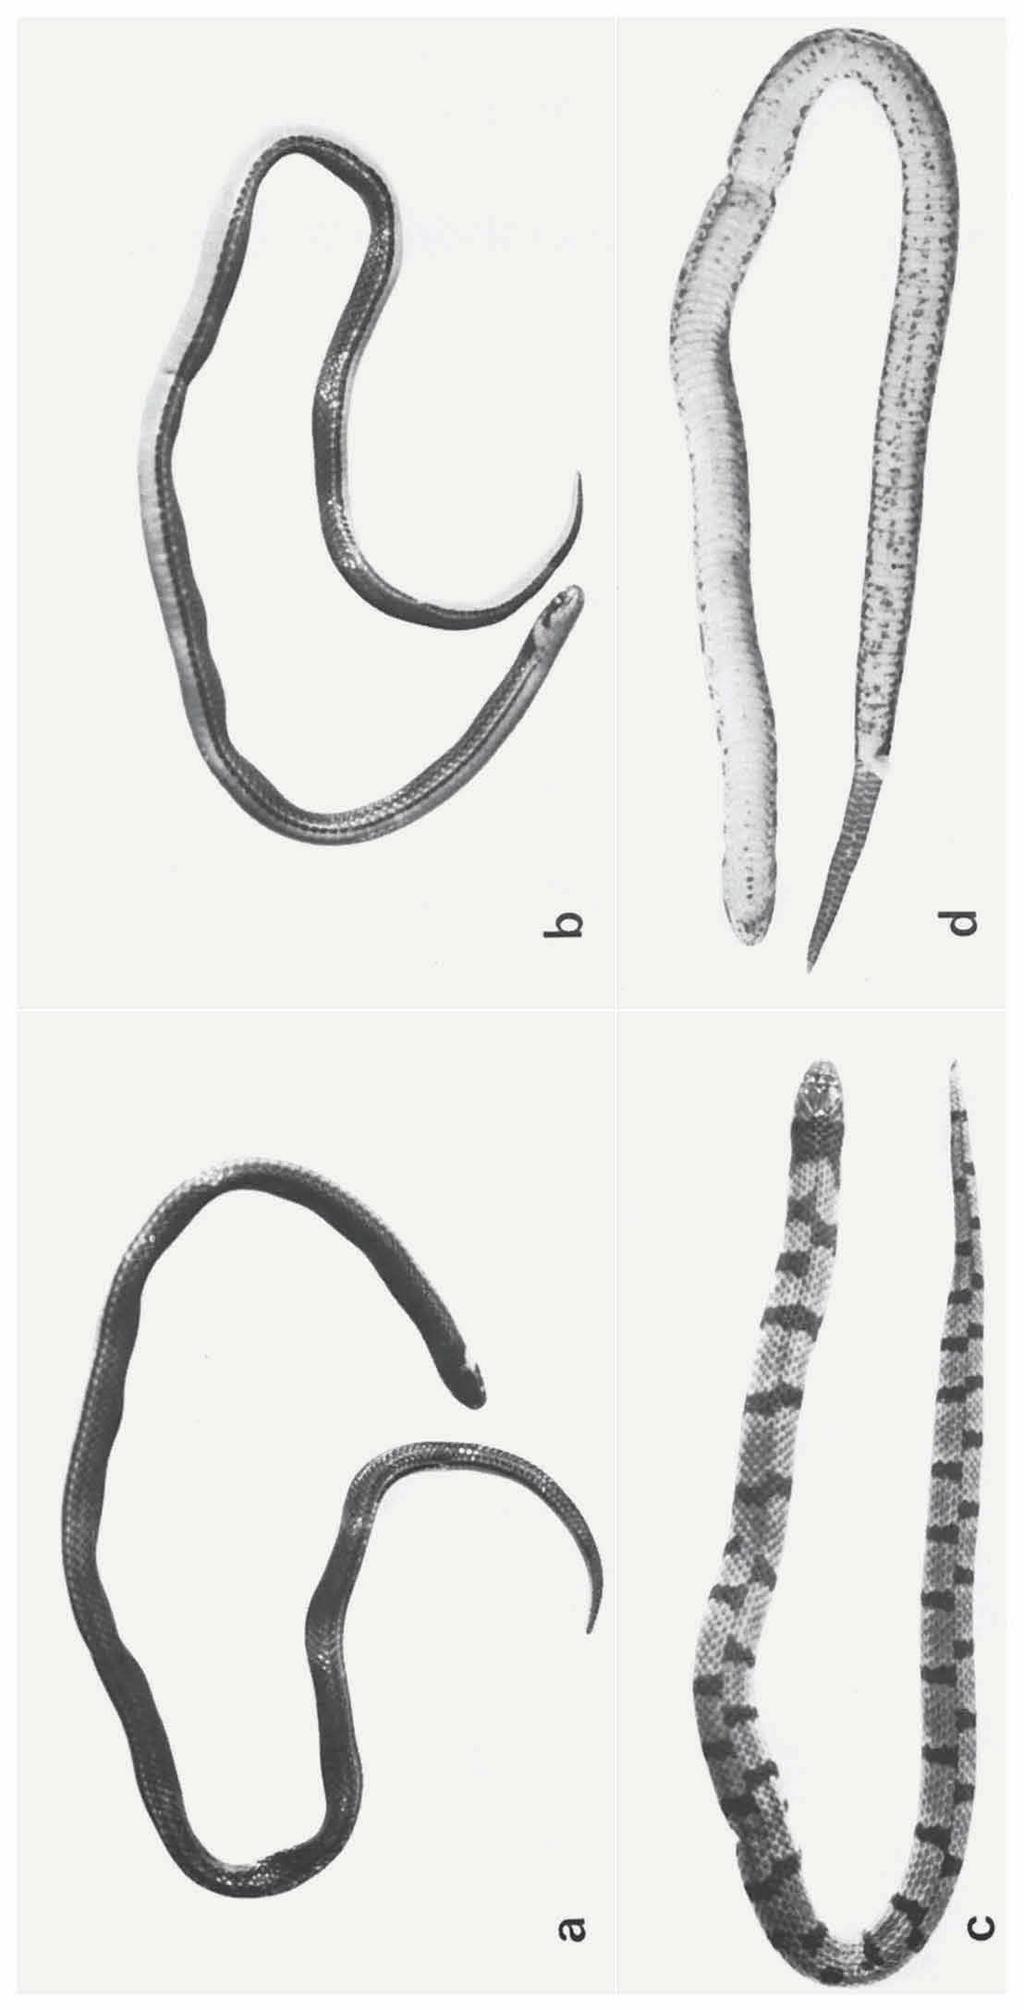 Figs, a, b. Atractus zidoki Gasc & Rodrigues, $ RMNH 18685, total length 174 + 28 mm. a, dorsal view; b, ventral view. Figs, c, d.